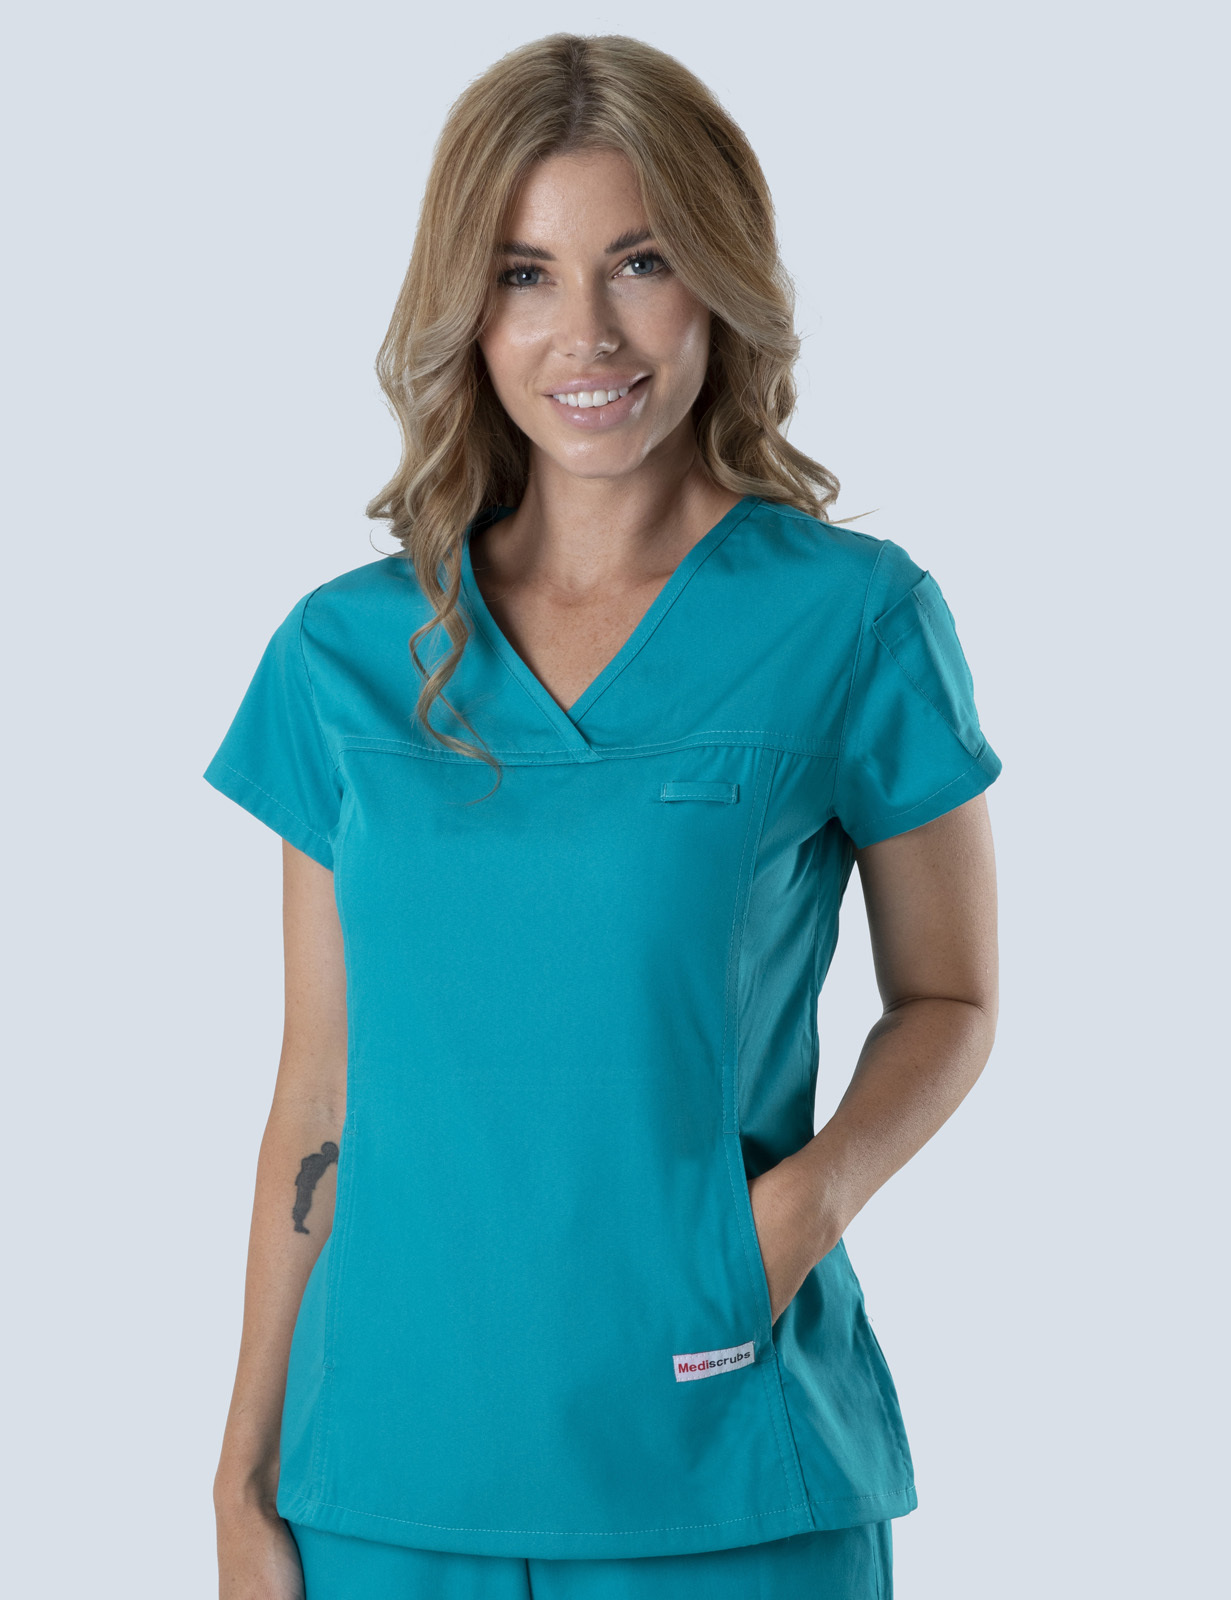 Queensland Children's Hospital Emergency Department Clinical Nurse  Uniform Top Bundle  (Women's Fit Top in Teal  incl Logos)